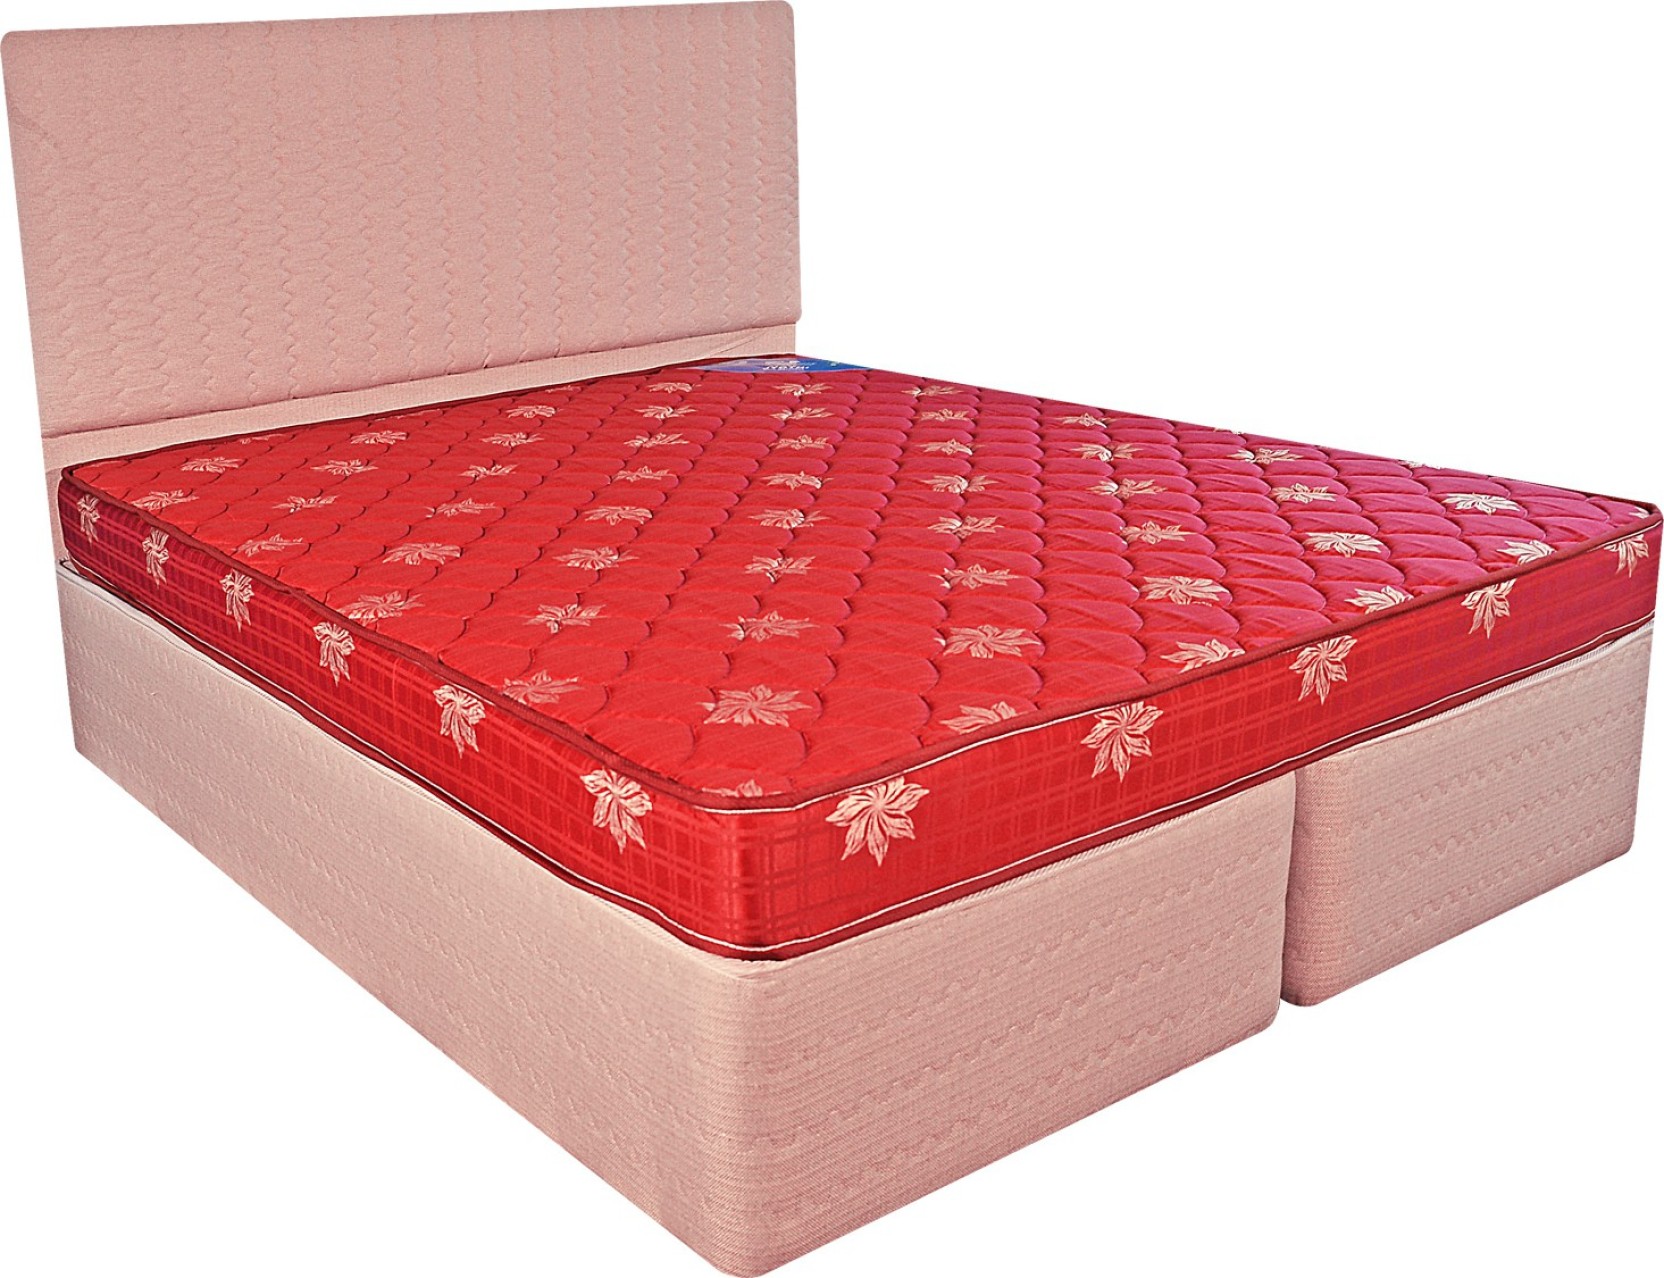 centuary mattress 6 inch price